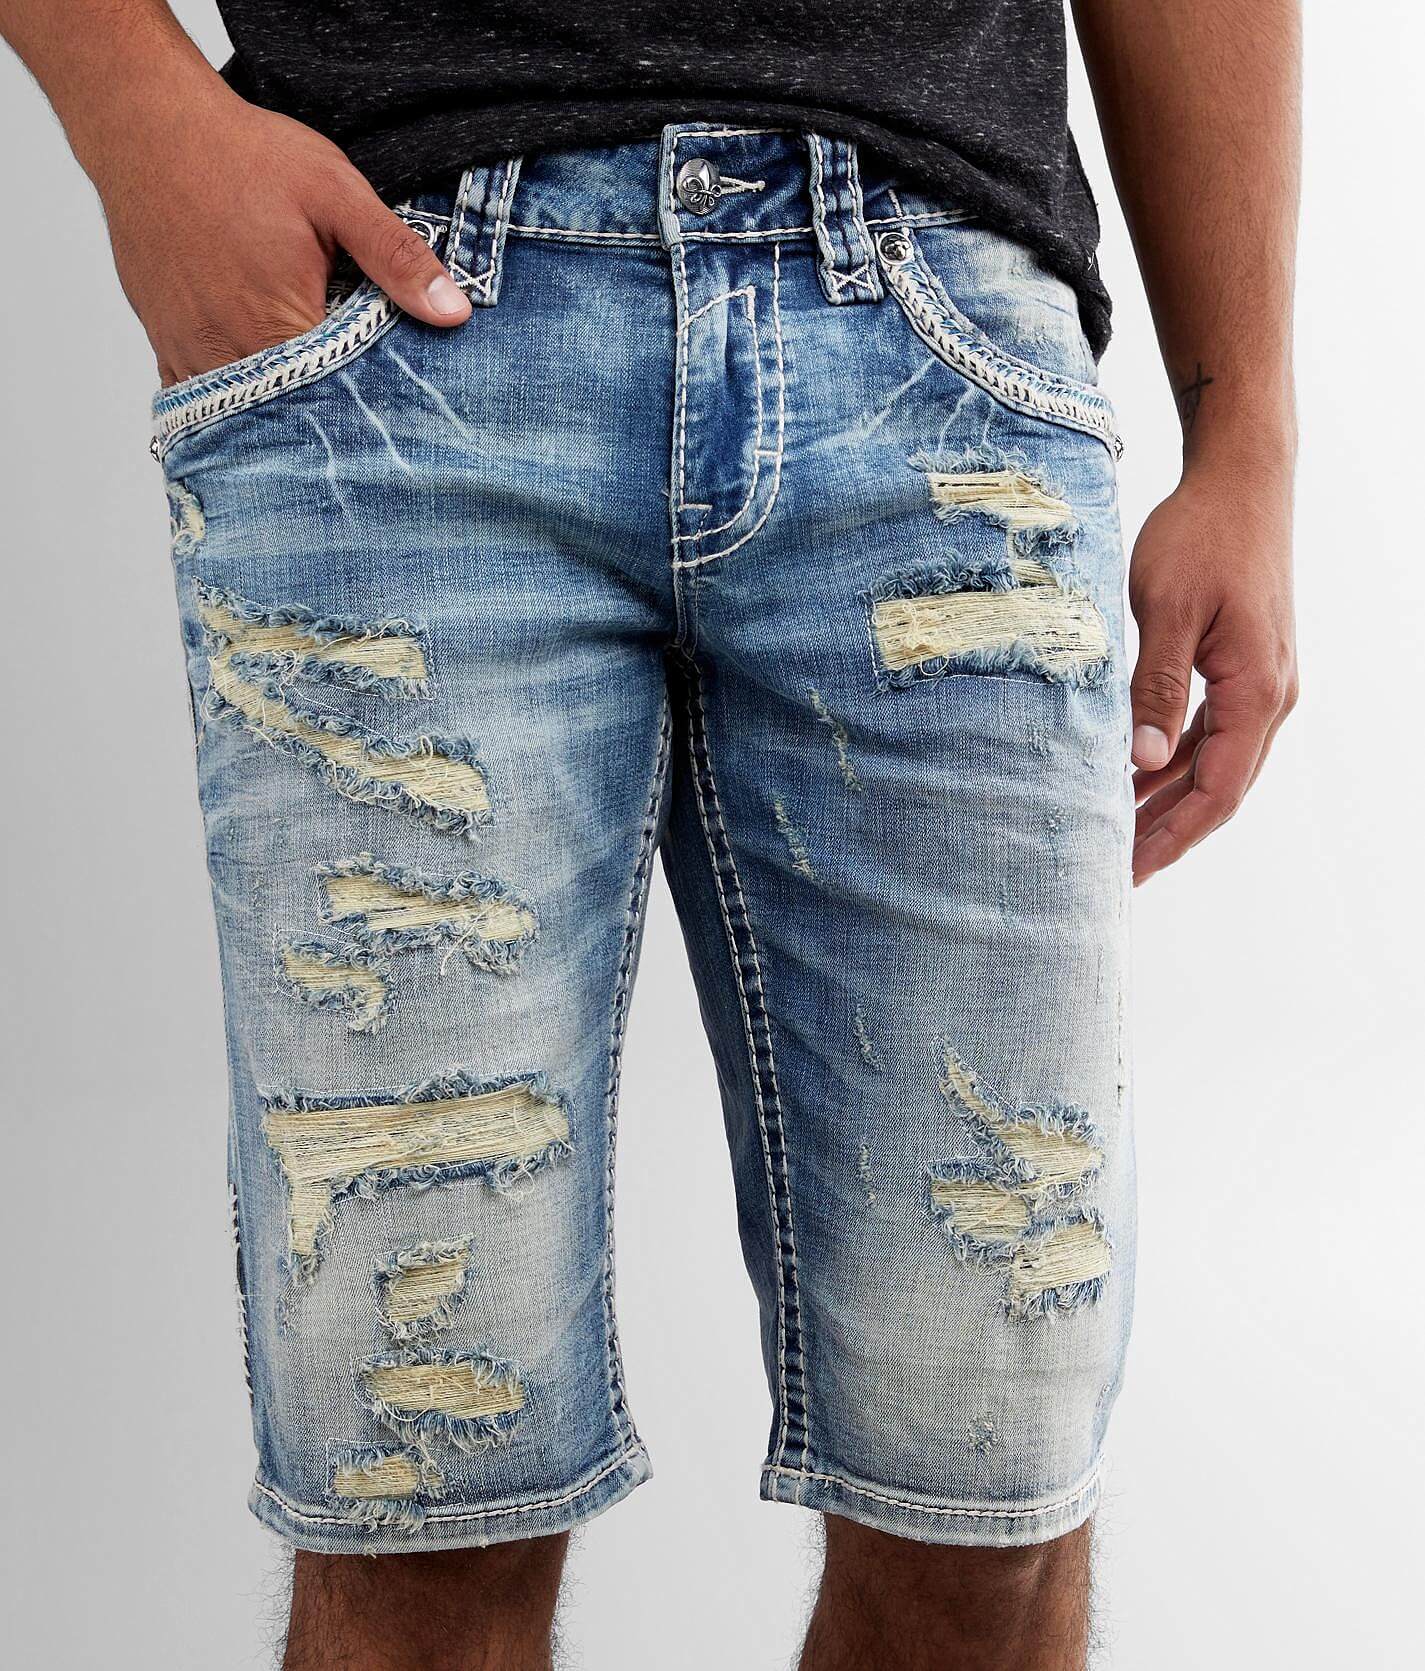 best fitting jeans for older men